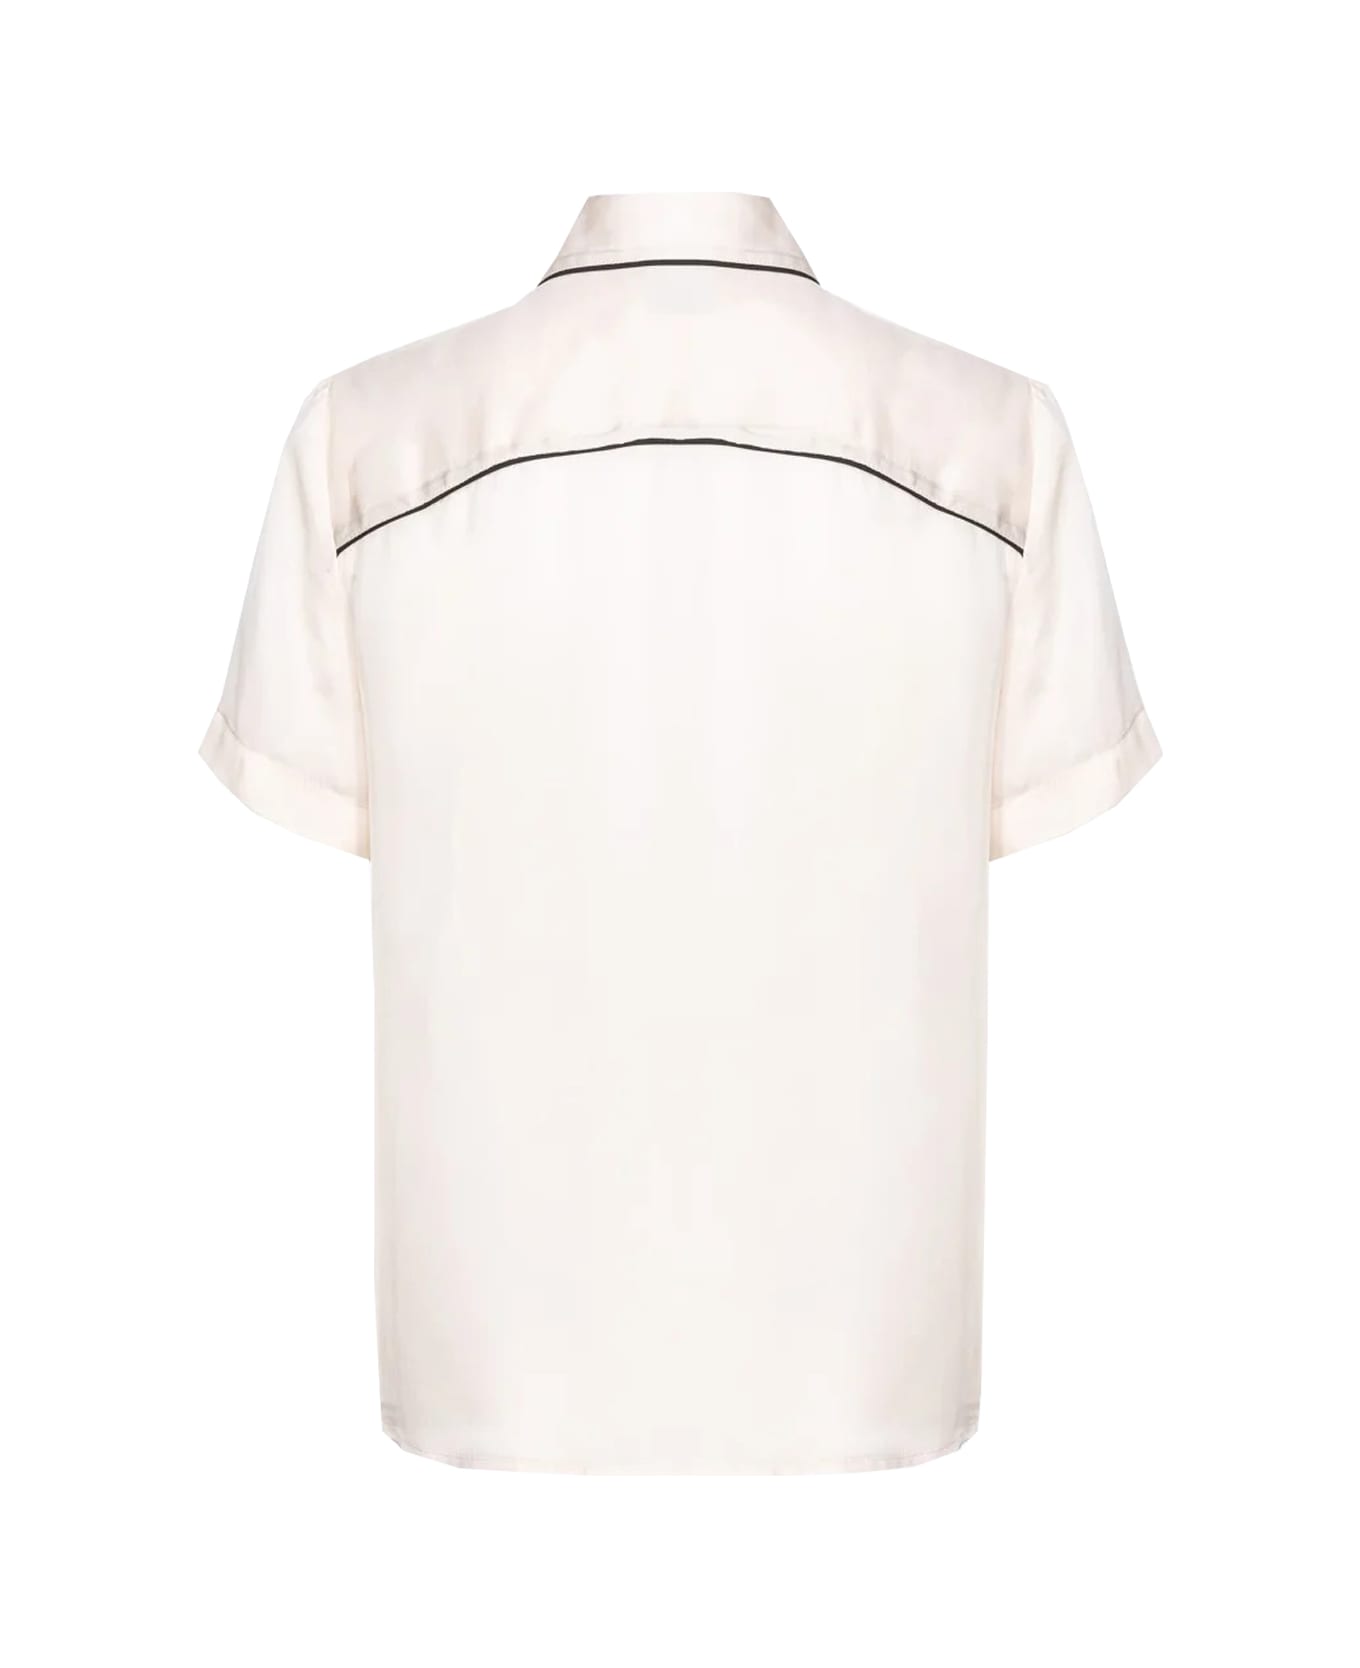 Pinko Shirt - White シャツ